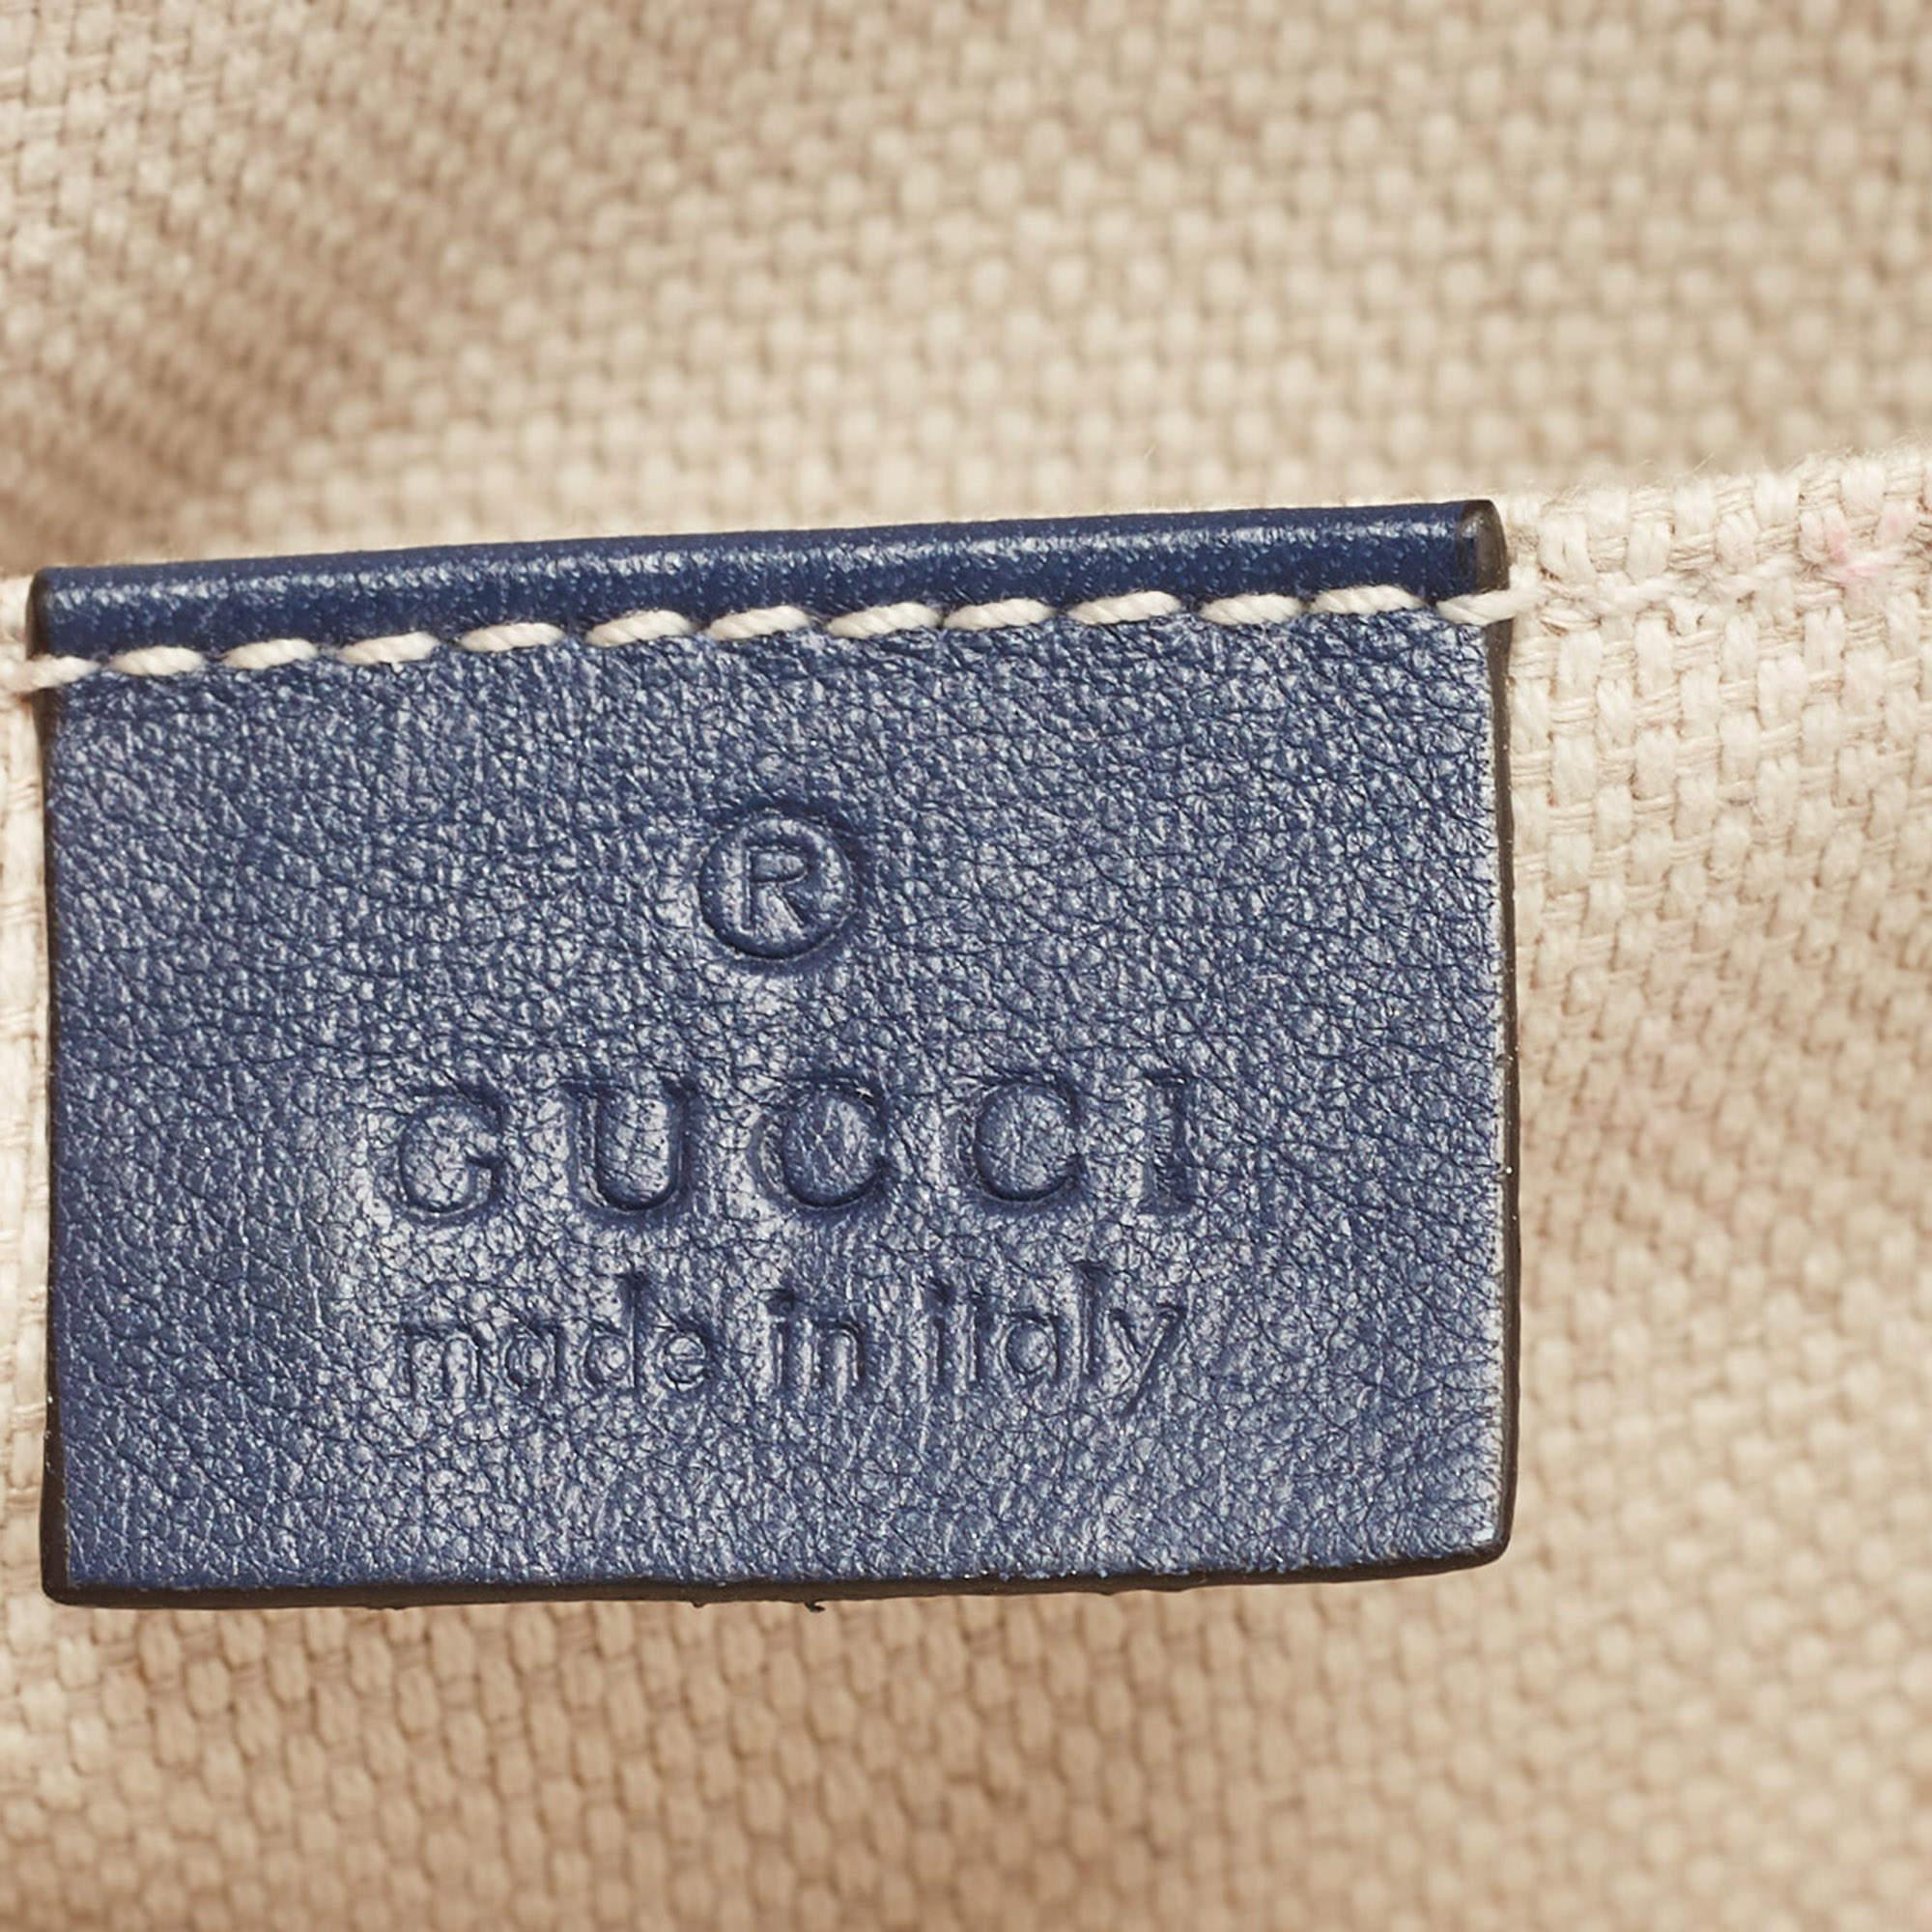 Gucci Navy Blue Patent Leather Small Soho Disco Crossbody Bag 10